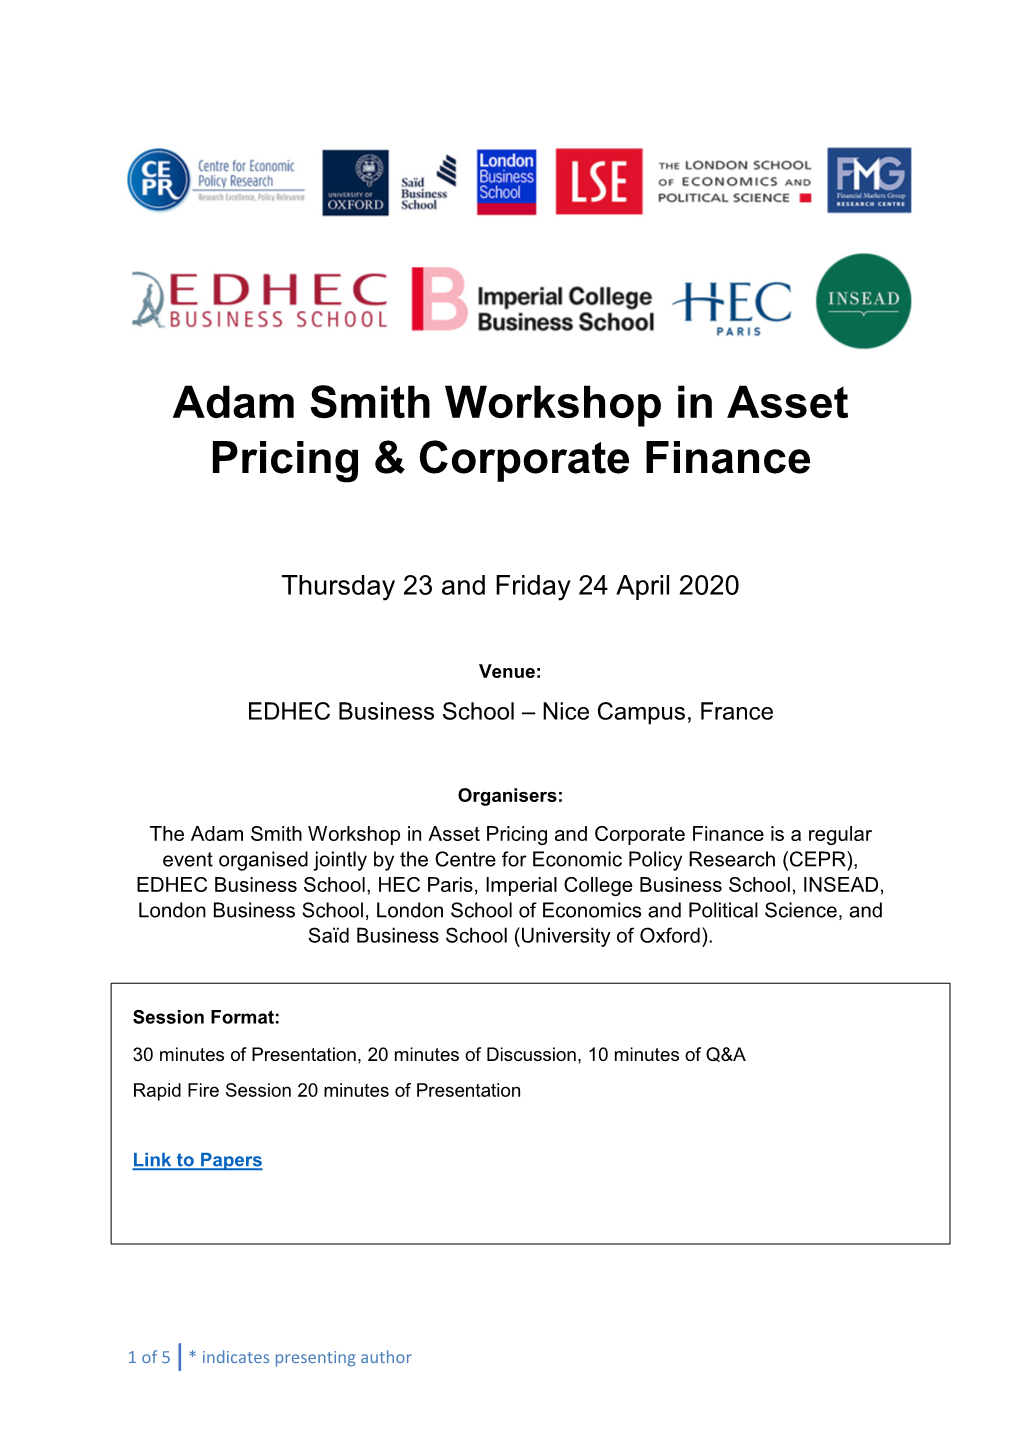 Adam Smith Workshop in Asset Pricing & Corporate Finance